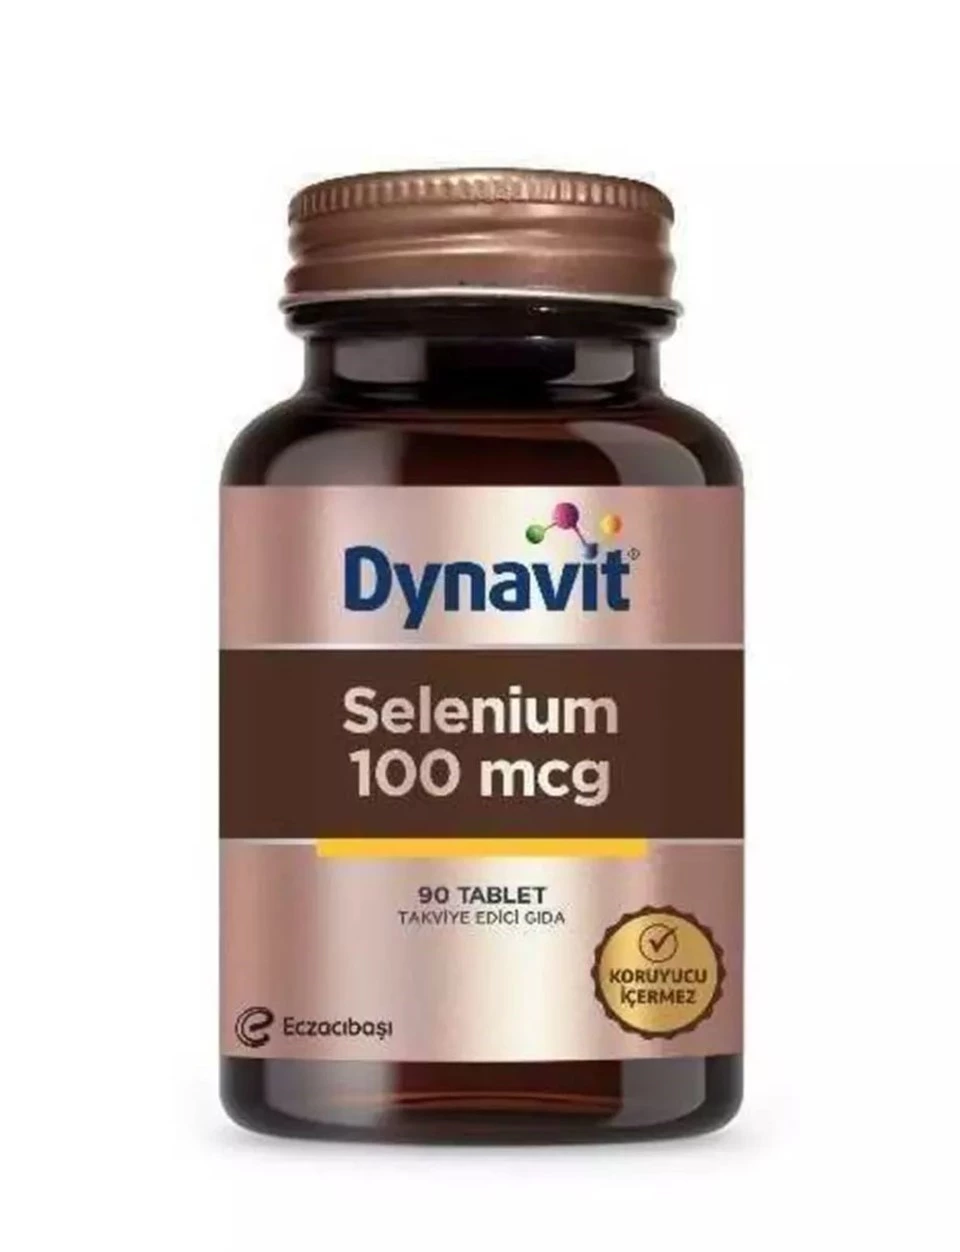 Dynavit Selenium 100 mcg 90 Tablet